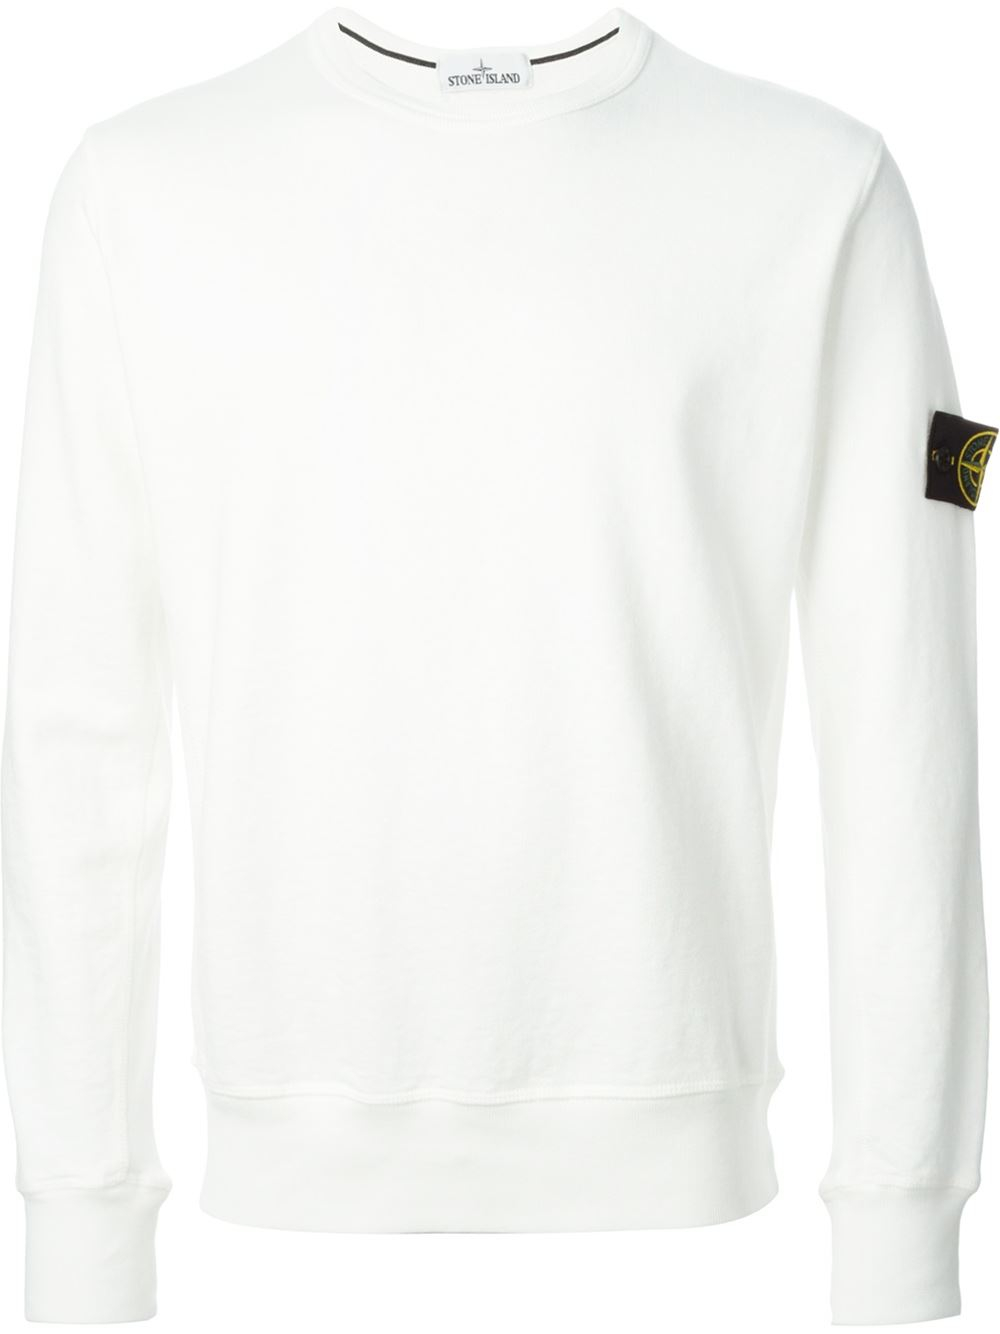 Stone Island Crew Neck Sweatshirt In White For Men Lyst [ 1334 x 1000 Pixel ]